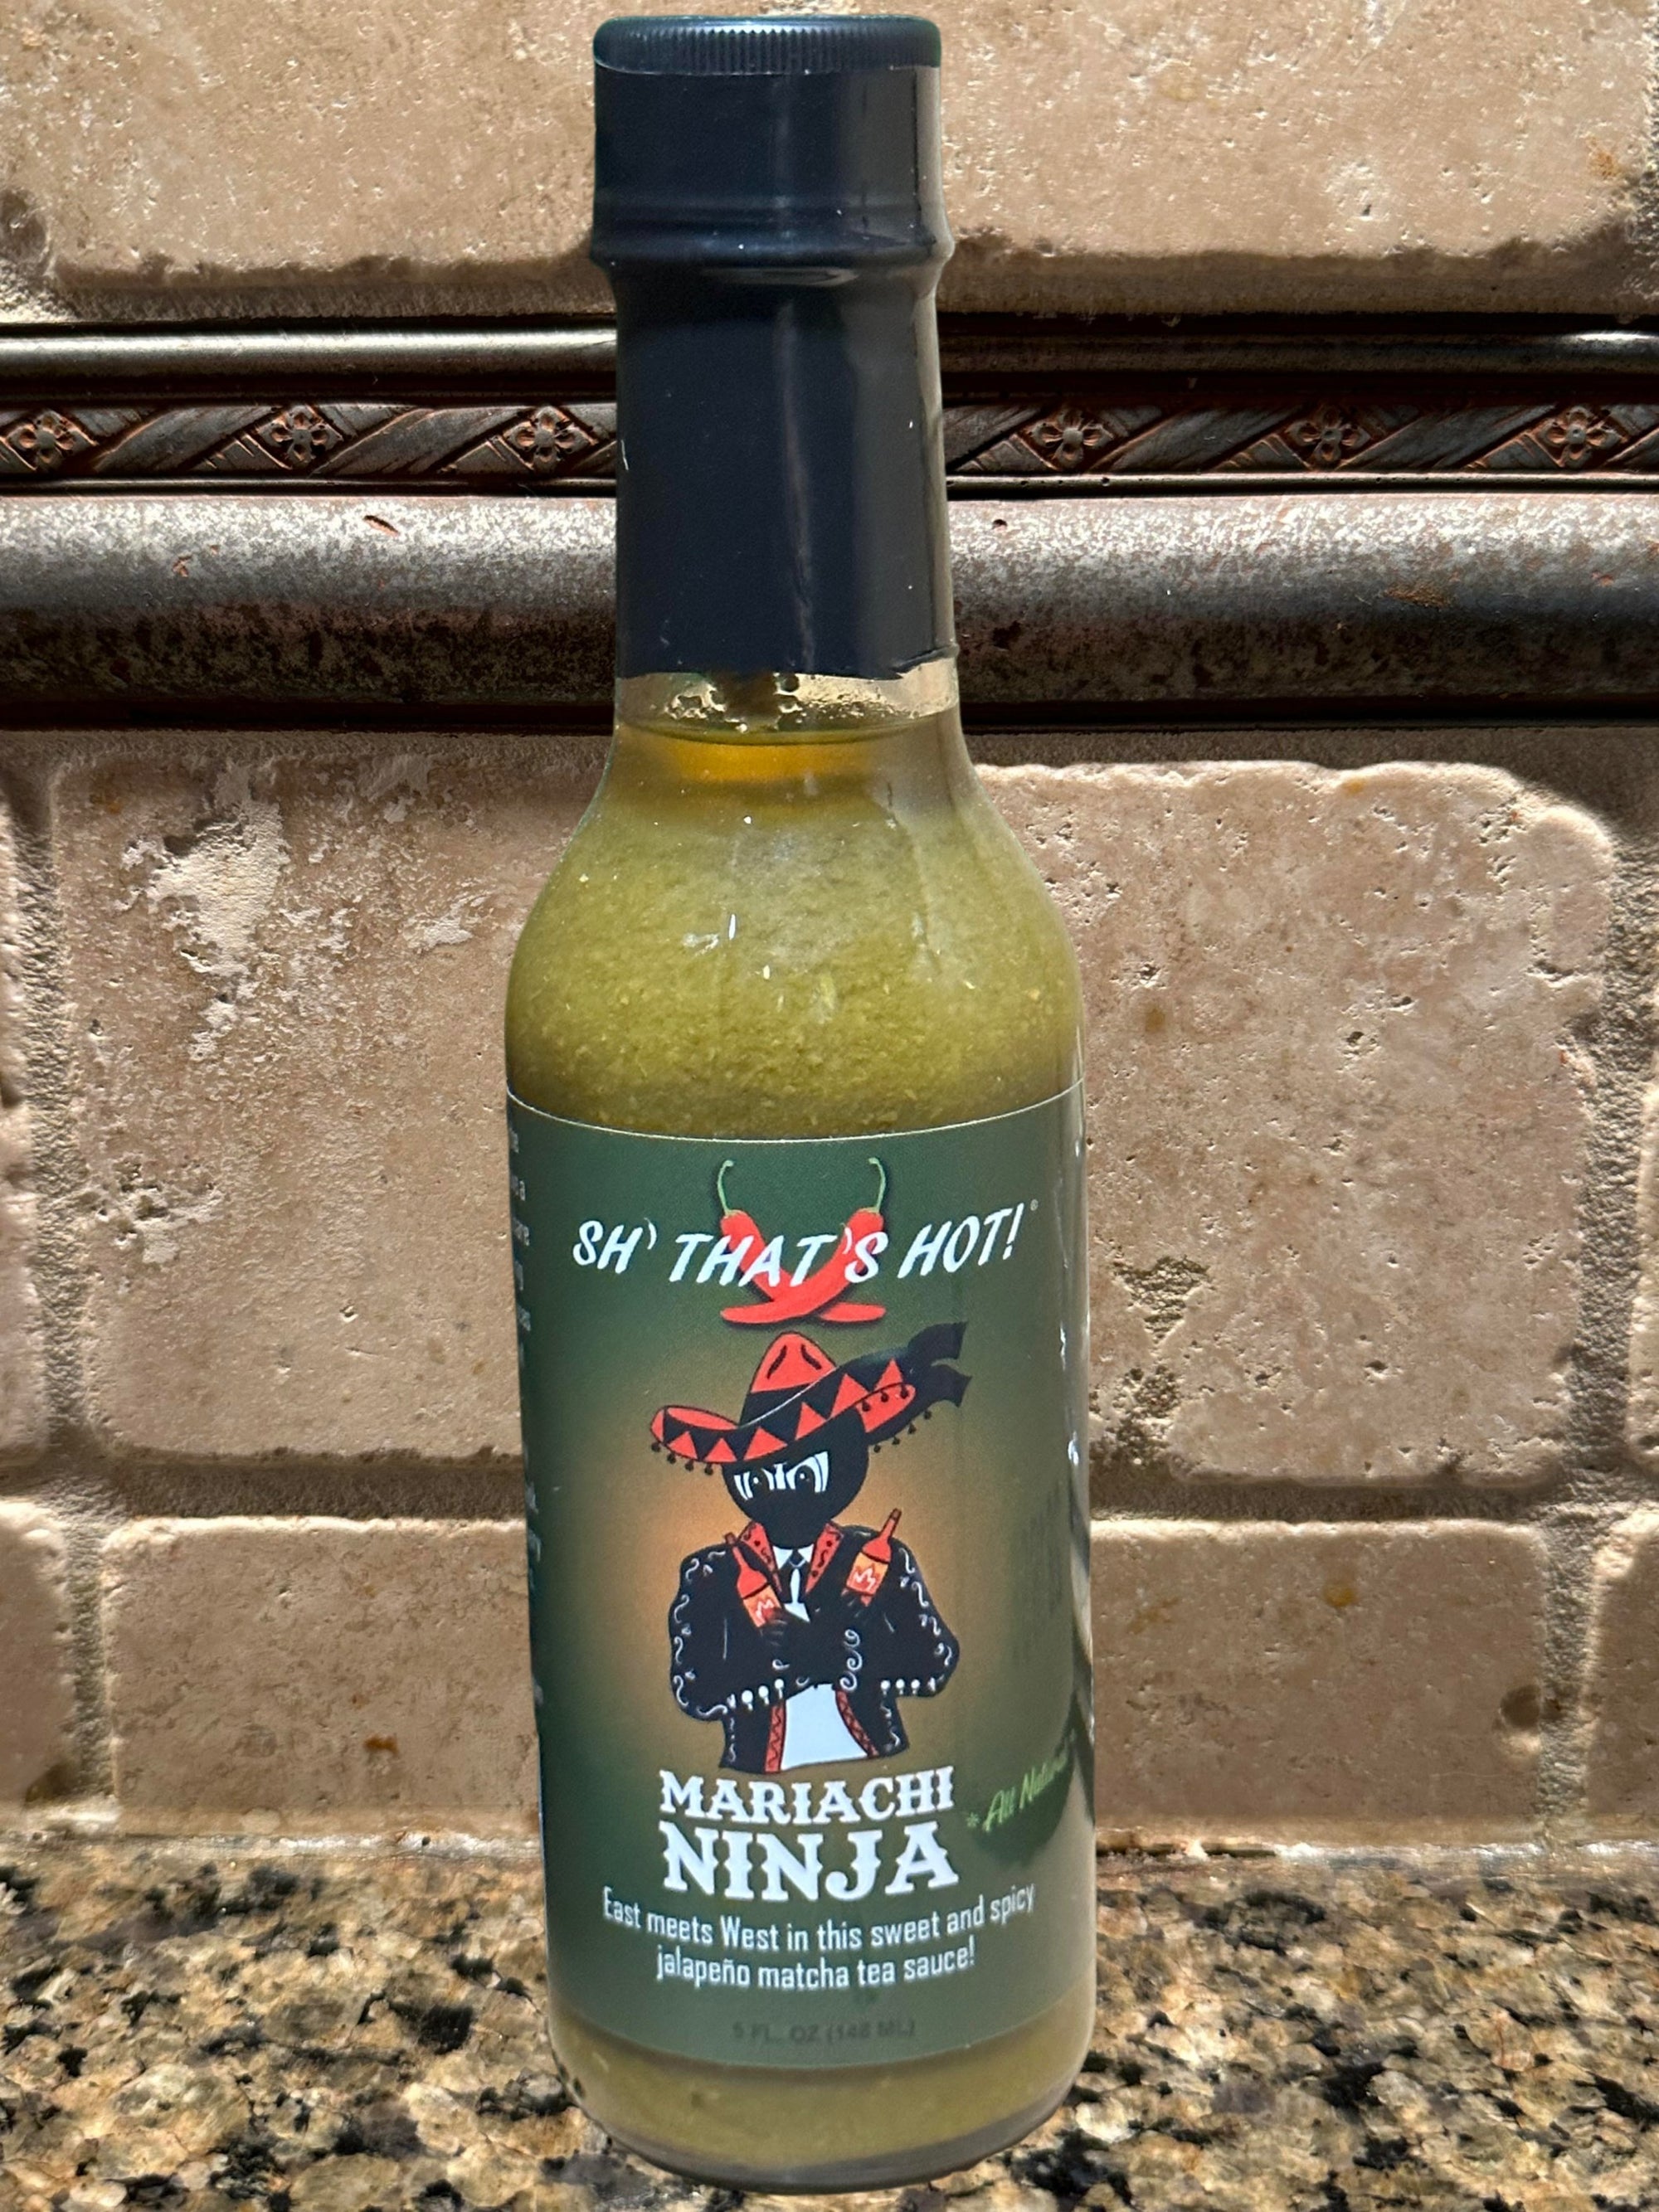 Sh' That's Hot! Mariachi Ninja Hot Sauce